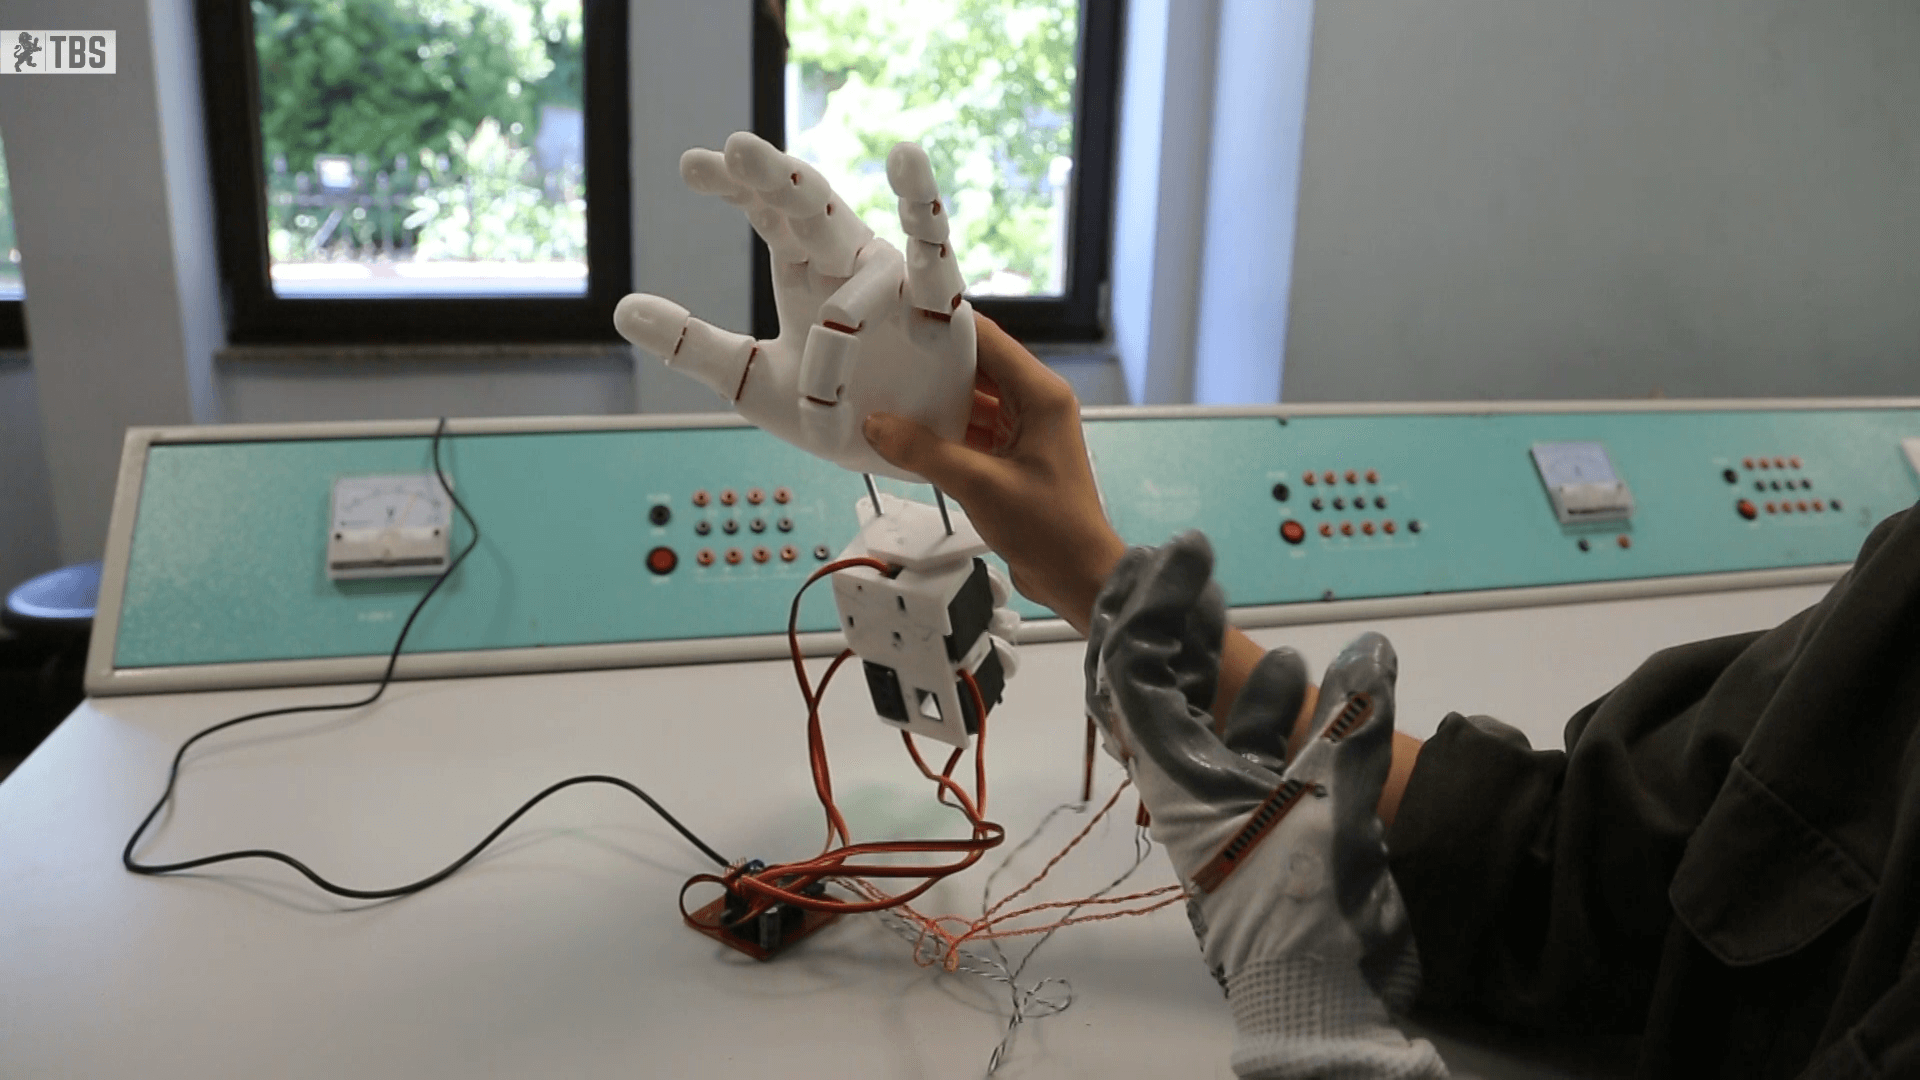 Robotic Arm Project